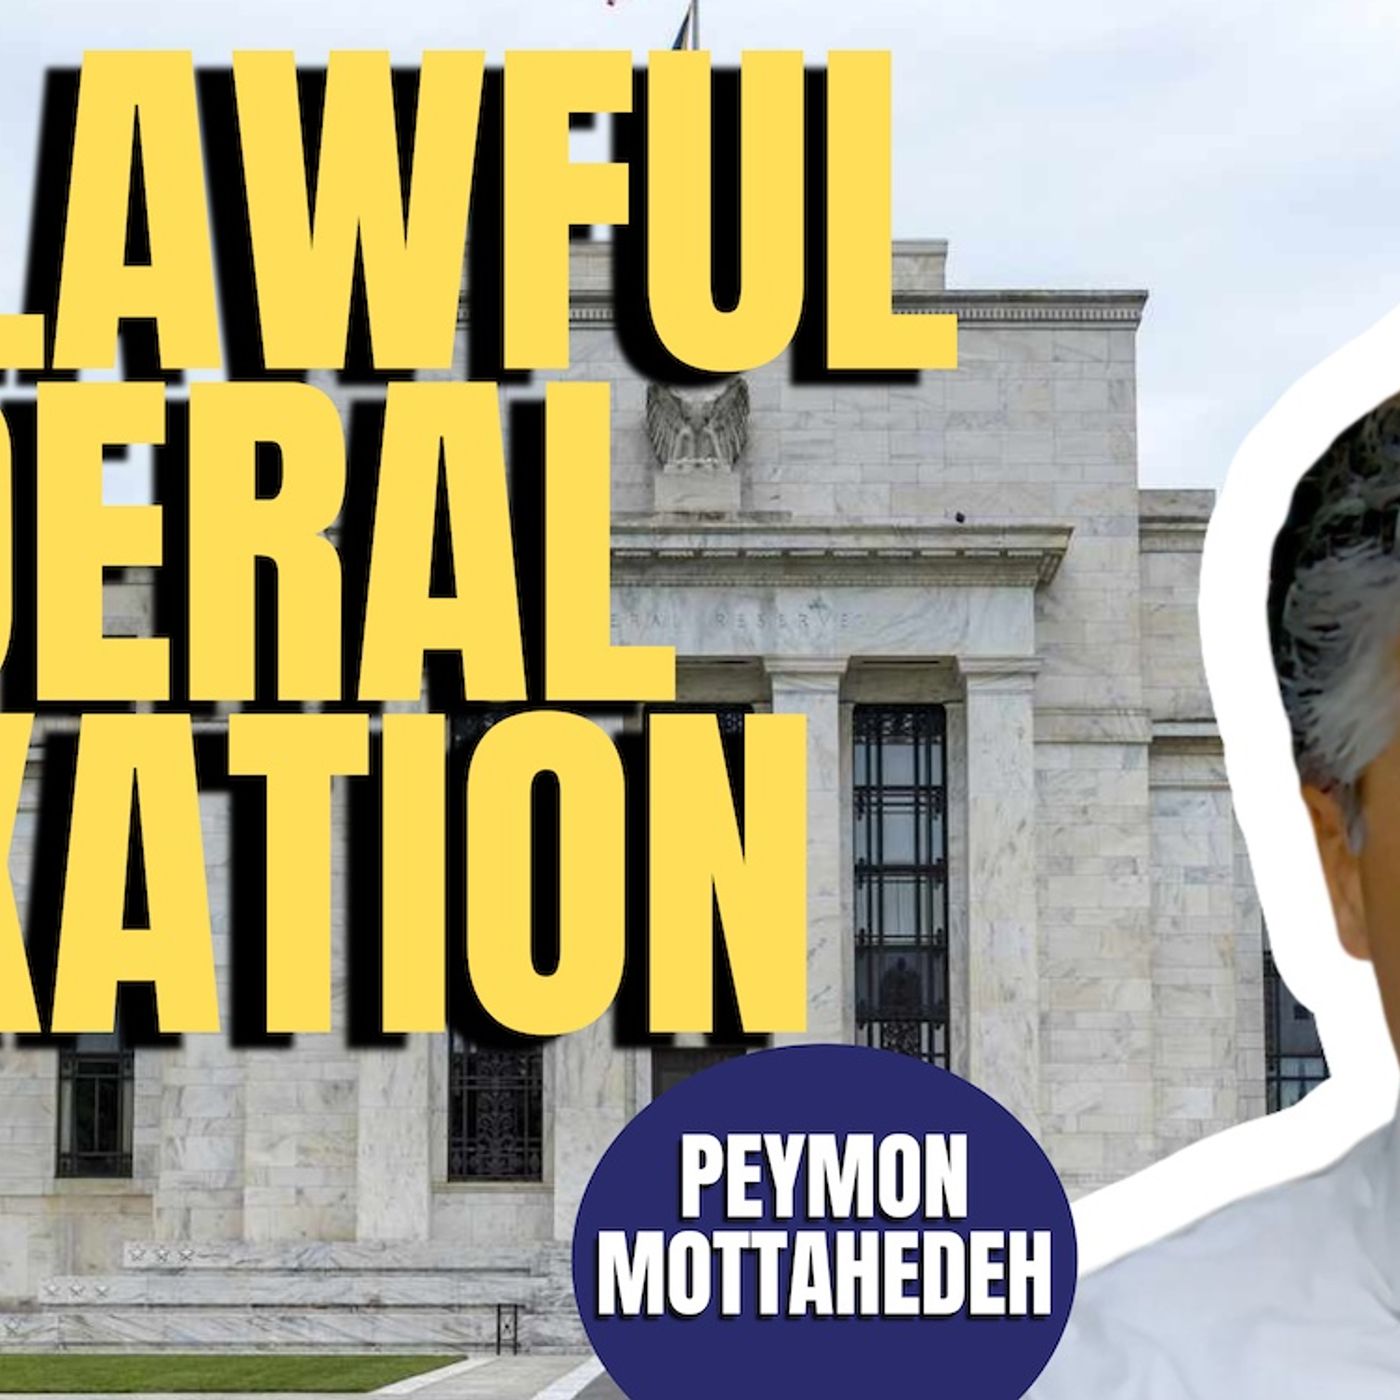 Unlawful Tax | Peymon Mottahedeh (TPC #1,488)